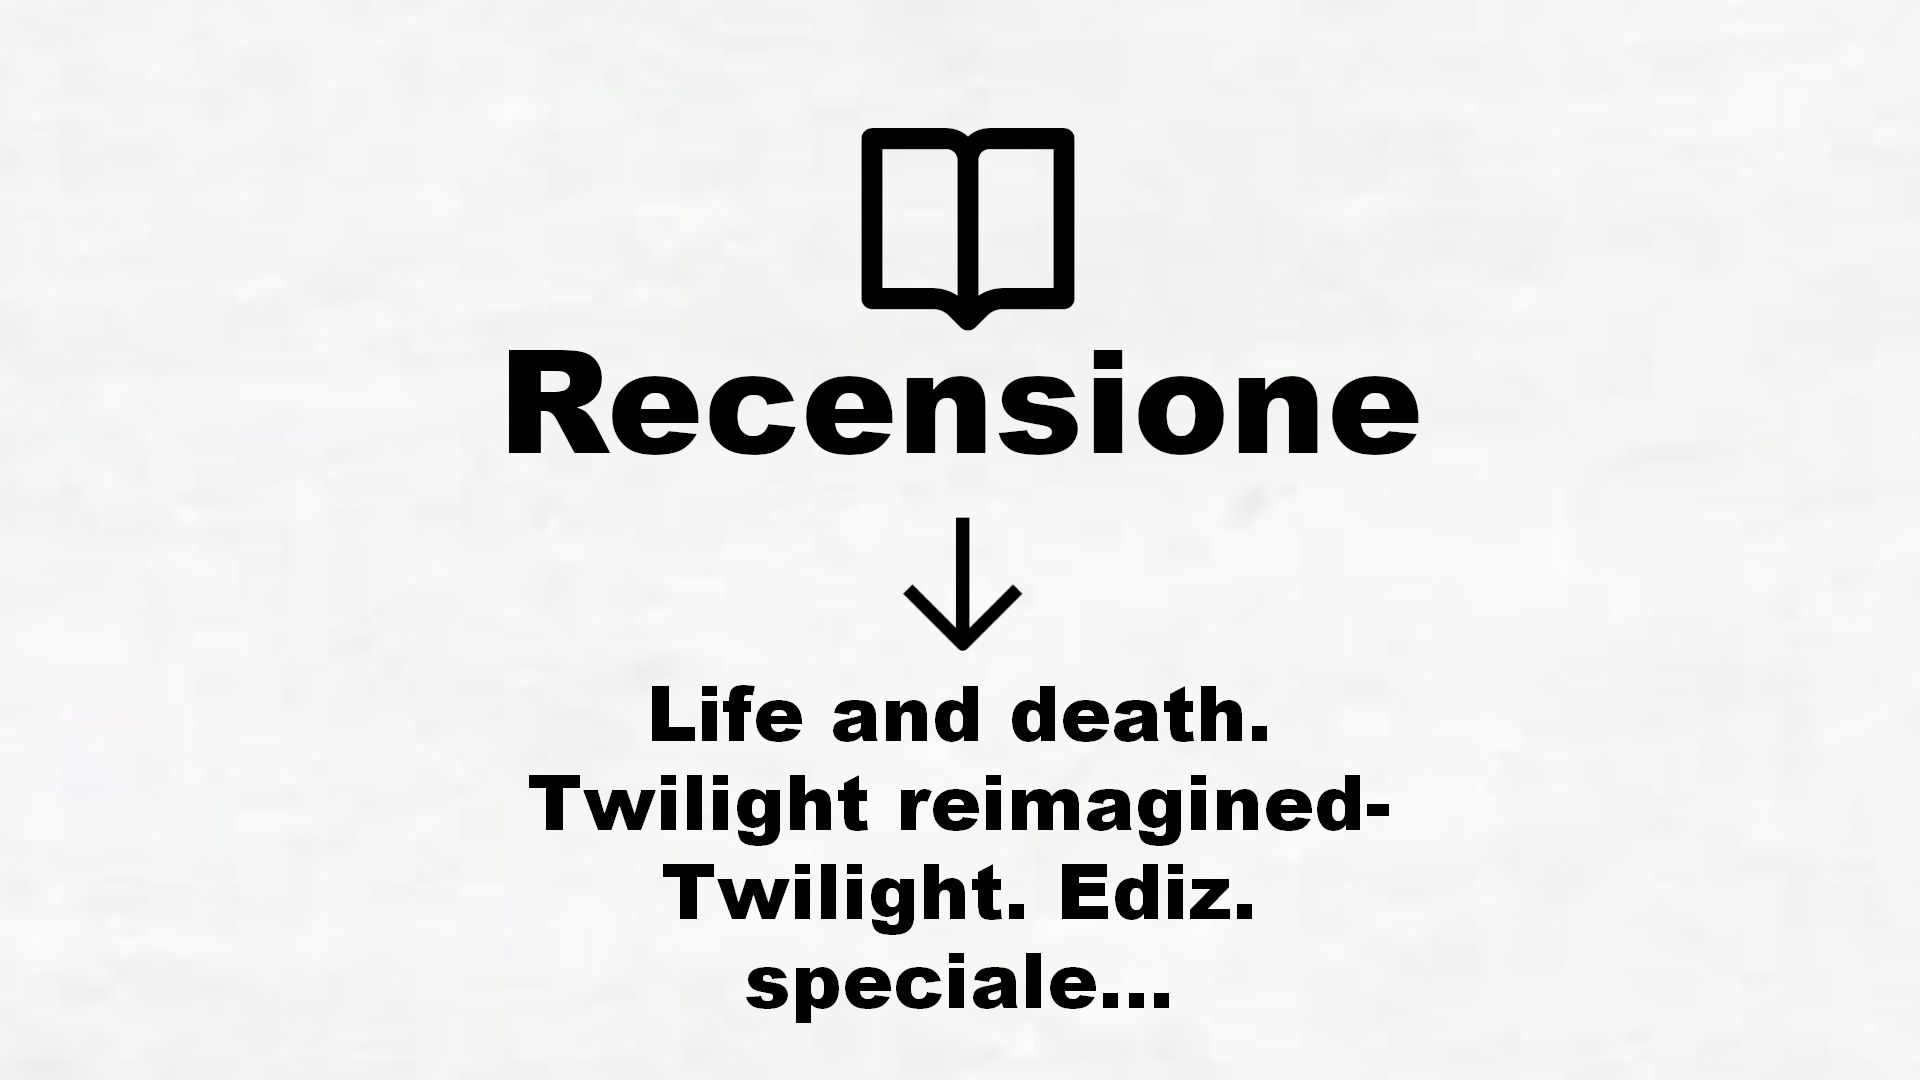 Life and death. Twilight reimagined-Twilight. Ediz. speciale – Recensione Libro